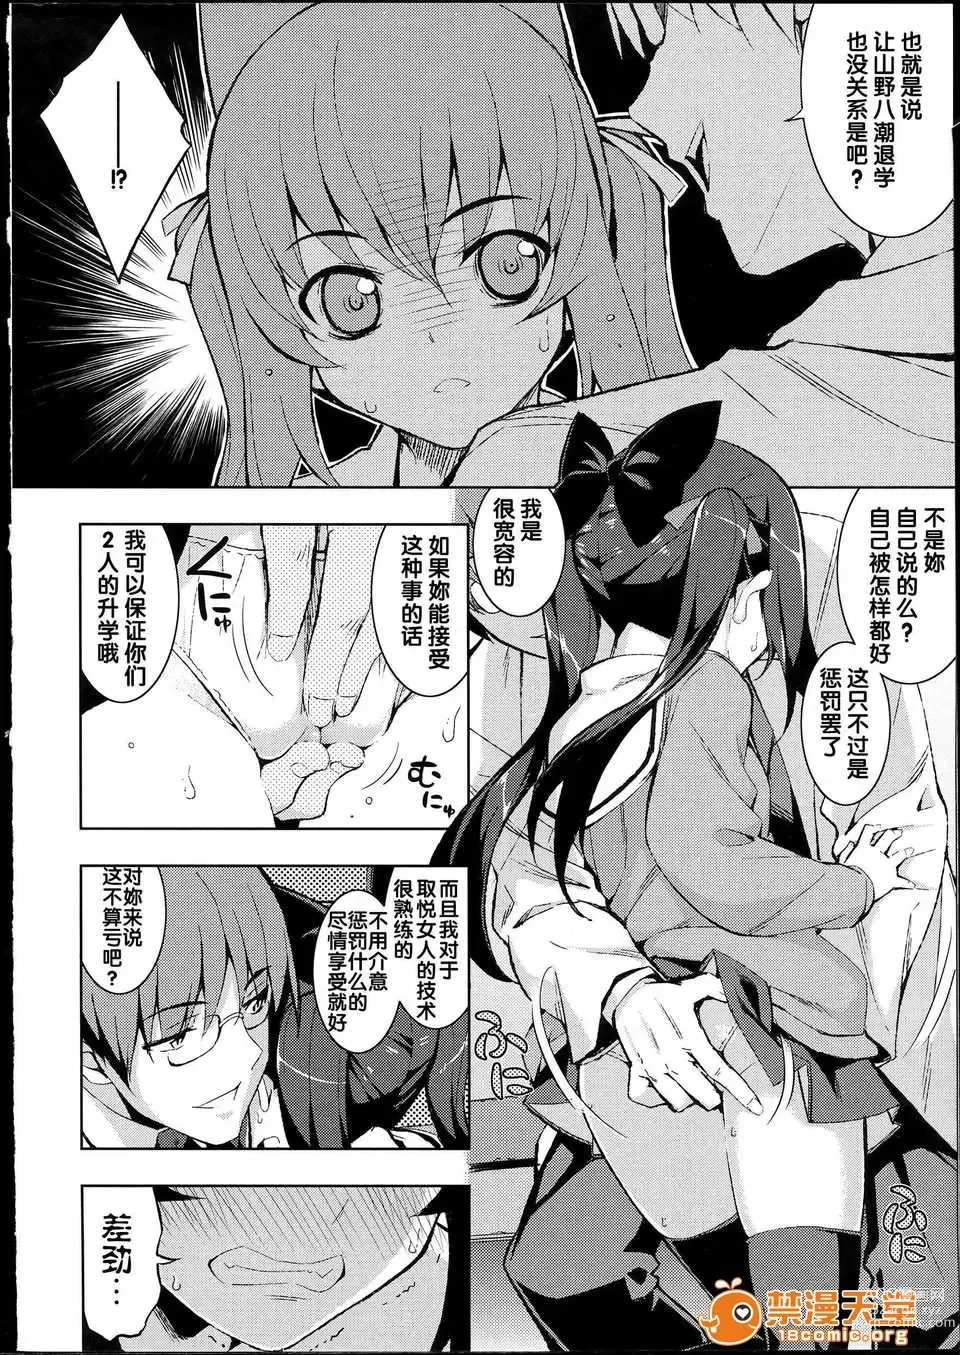 Page 18 of manga NTR2